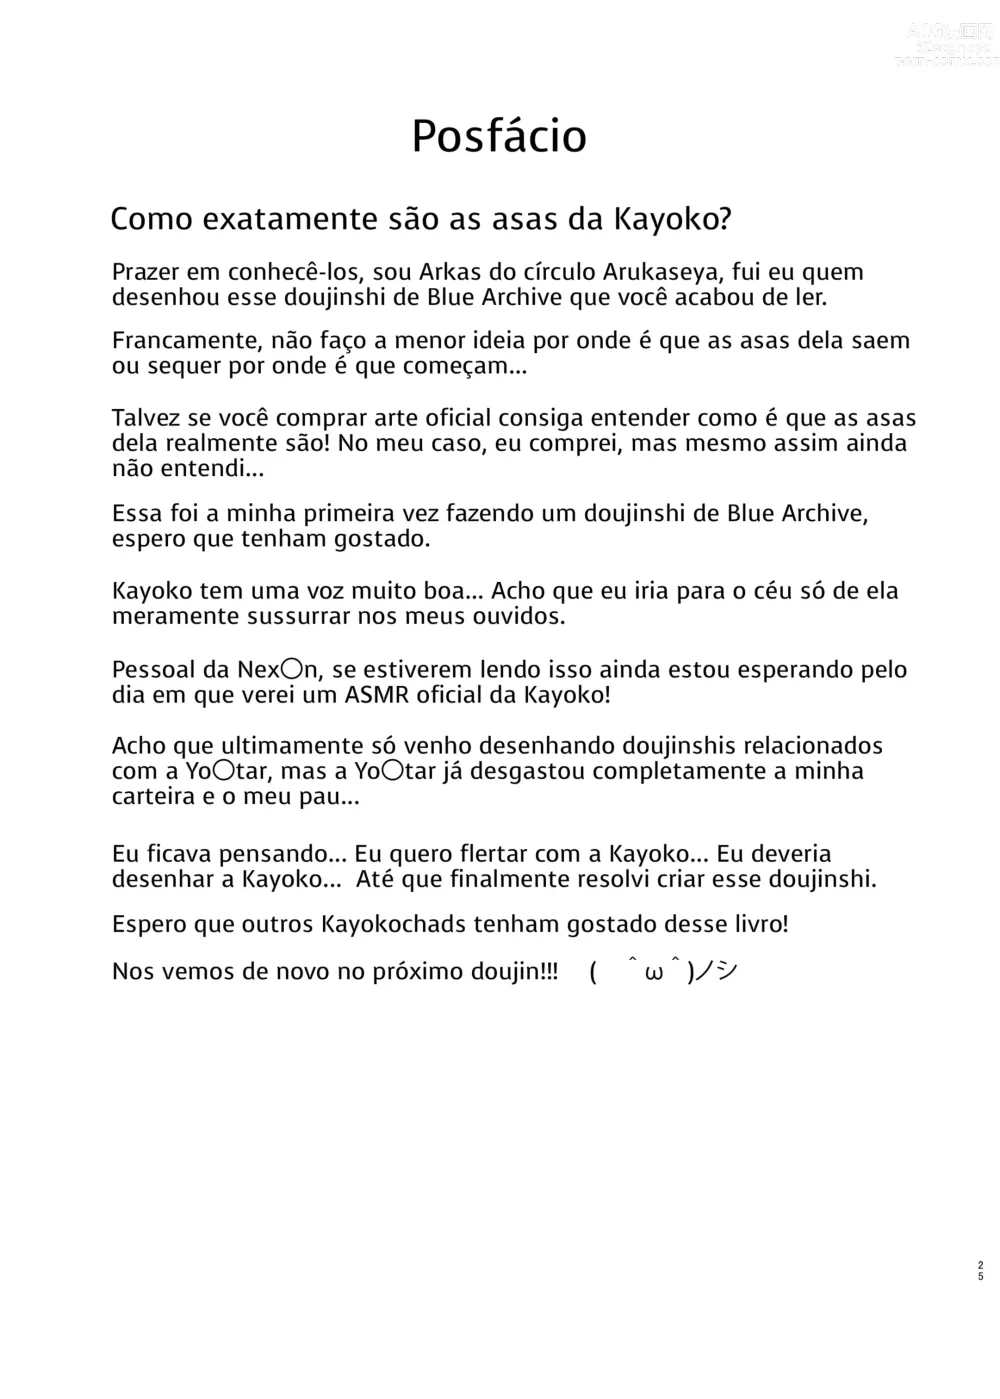 Page 25 of doujinshi Kayoko-x - Transando com a Kayoko